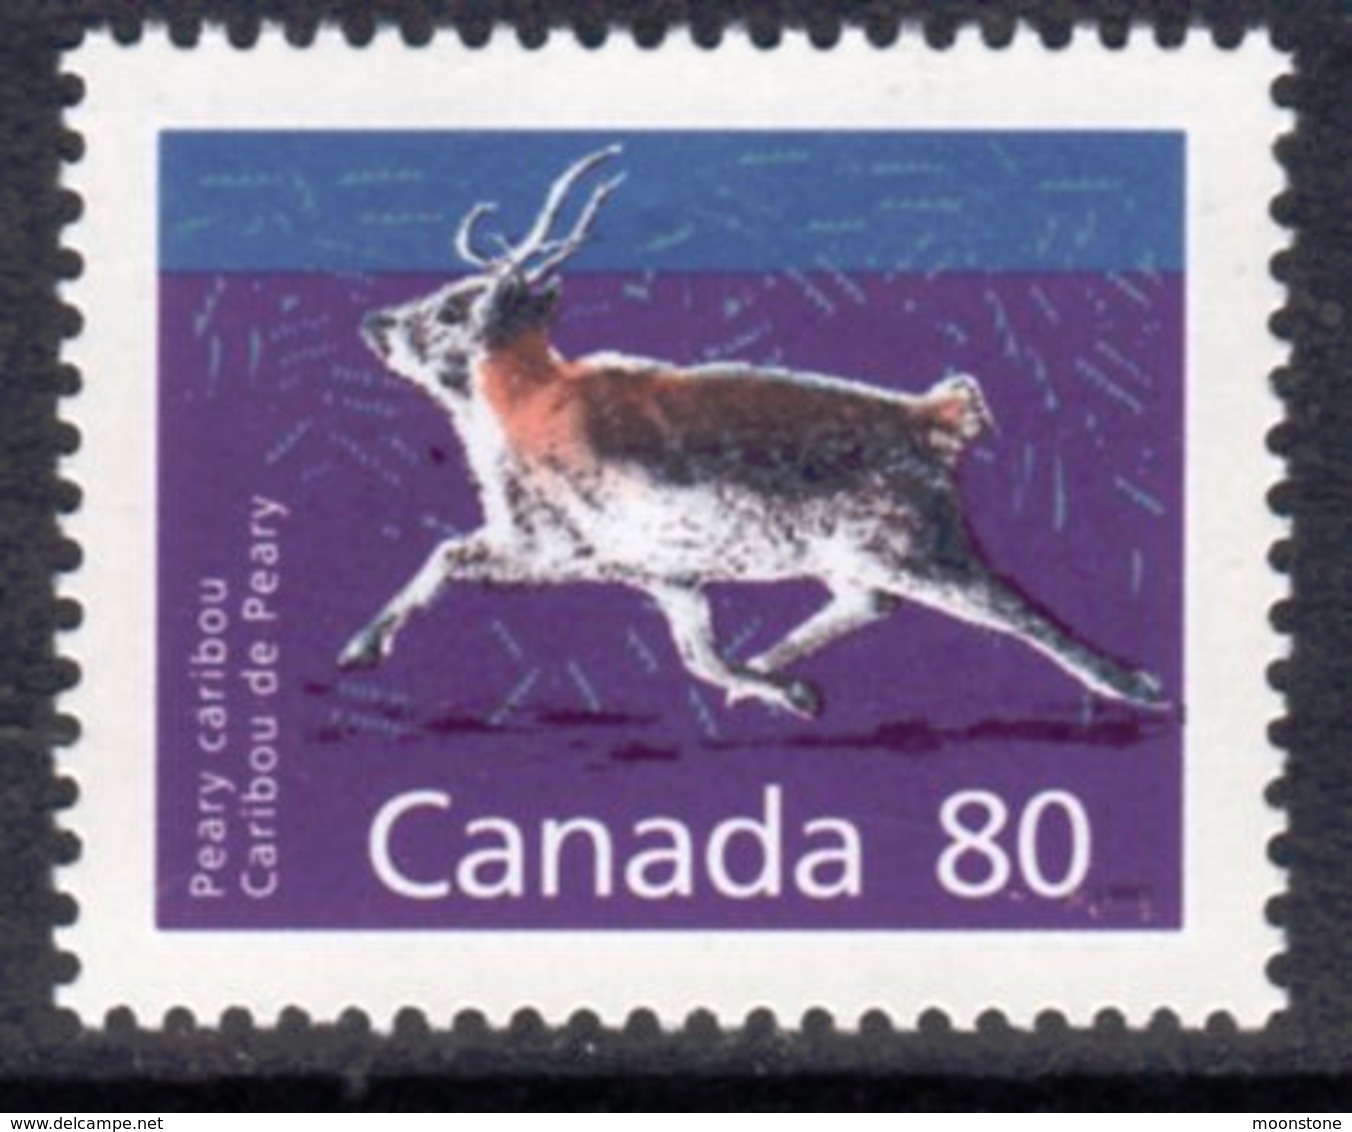 Canada 1988-93 Mammals Definitives 80c Peary Caribou Value, MNH, SG 1276c - Ungebraucht